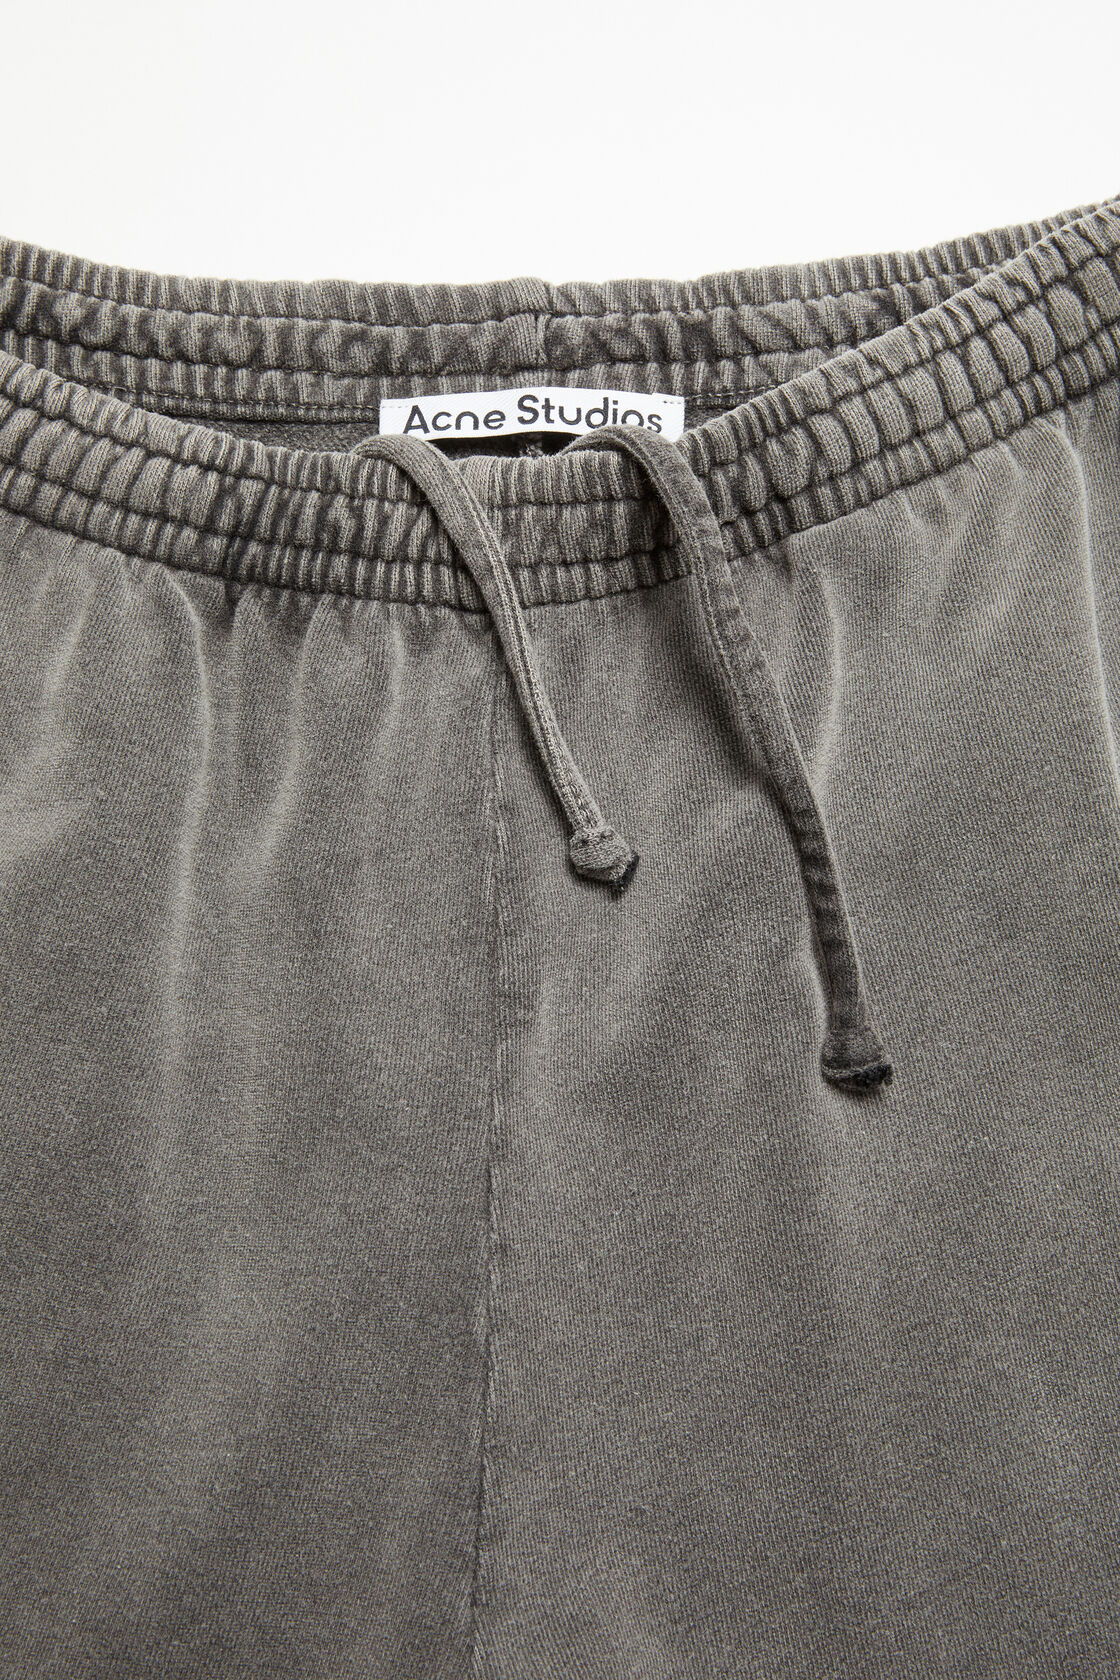 ACNE STUDIOS Vintage Sweatpant in Faded Black S